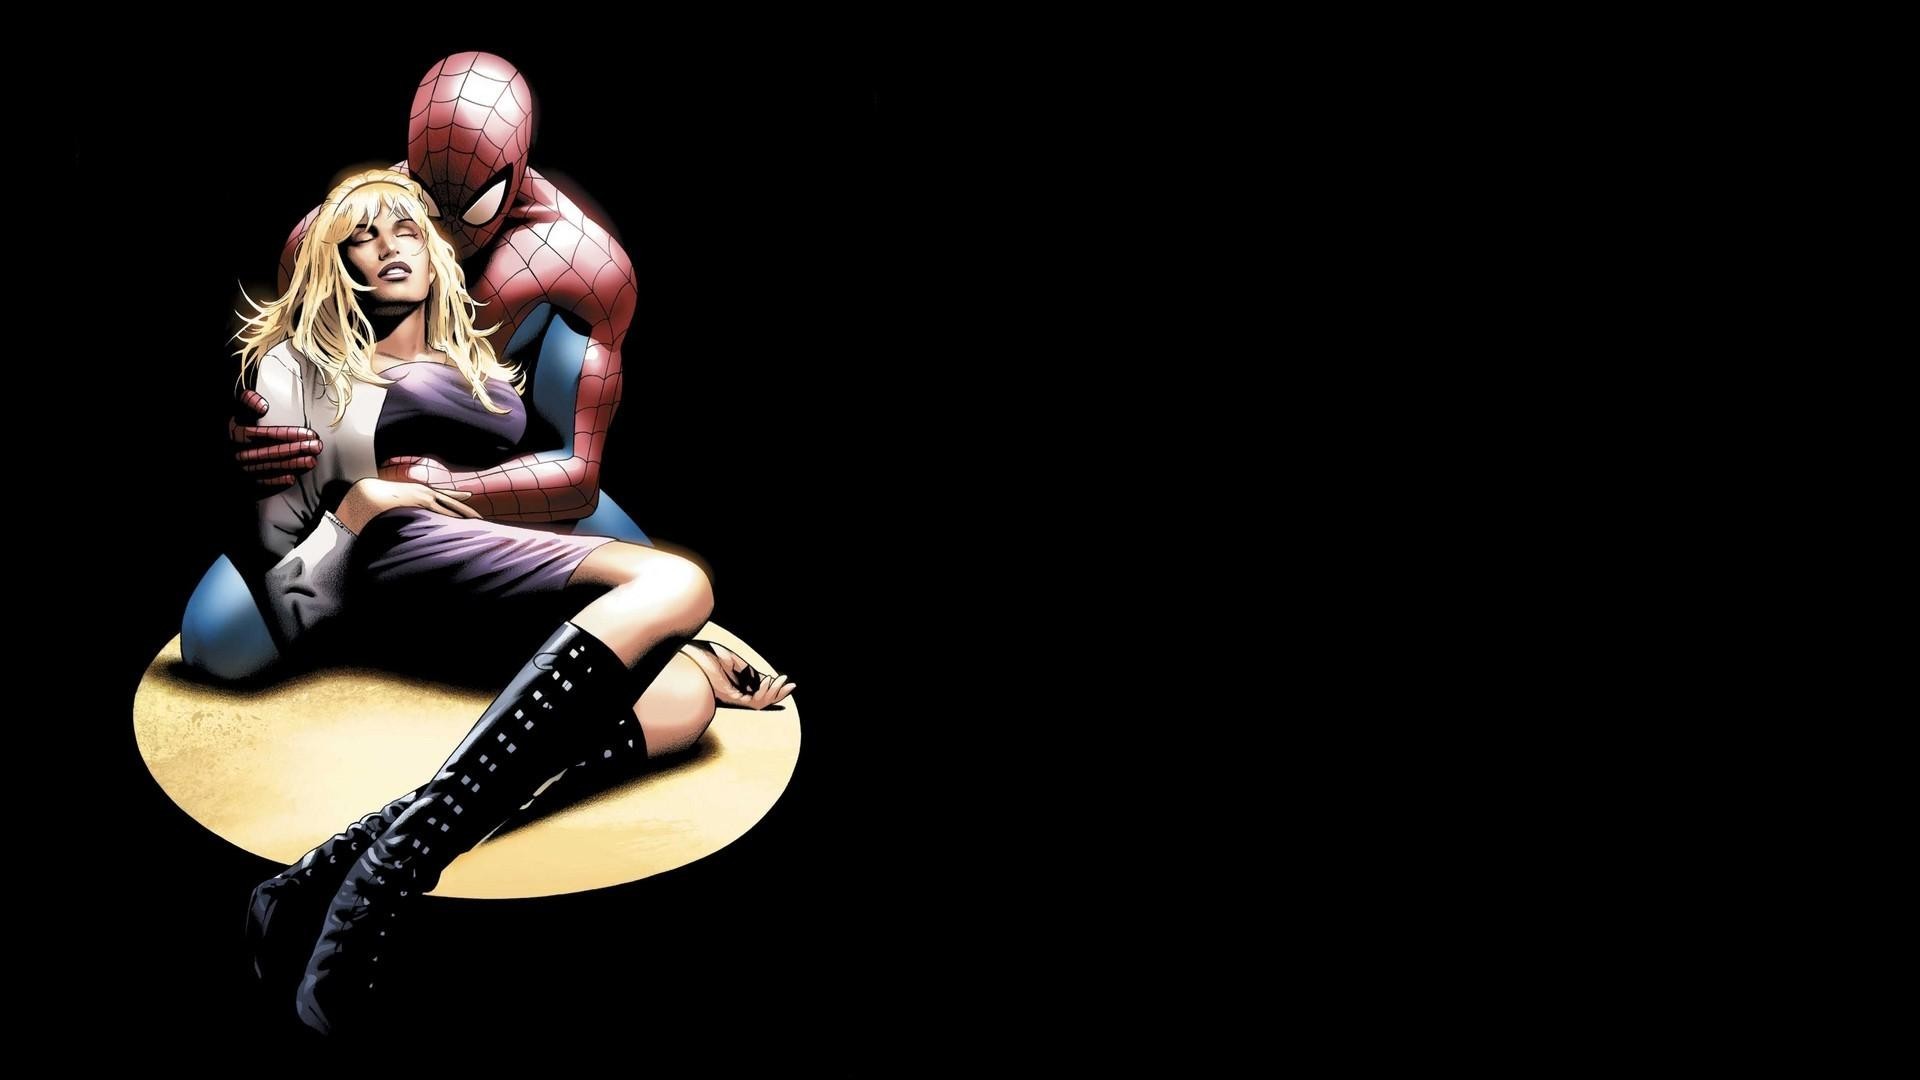 1920x1080 Spiderman comics spider man superhero with women wallpapers desktop and  mobile backgrounds jpg  Female superhero